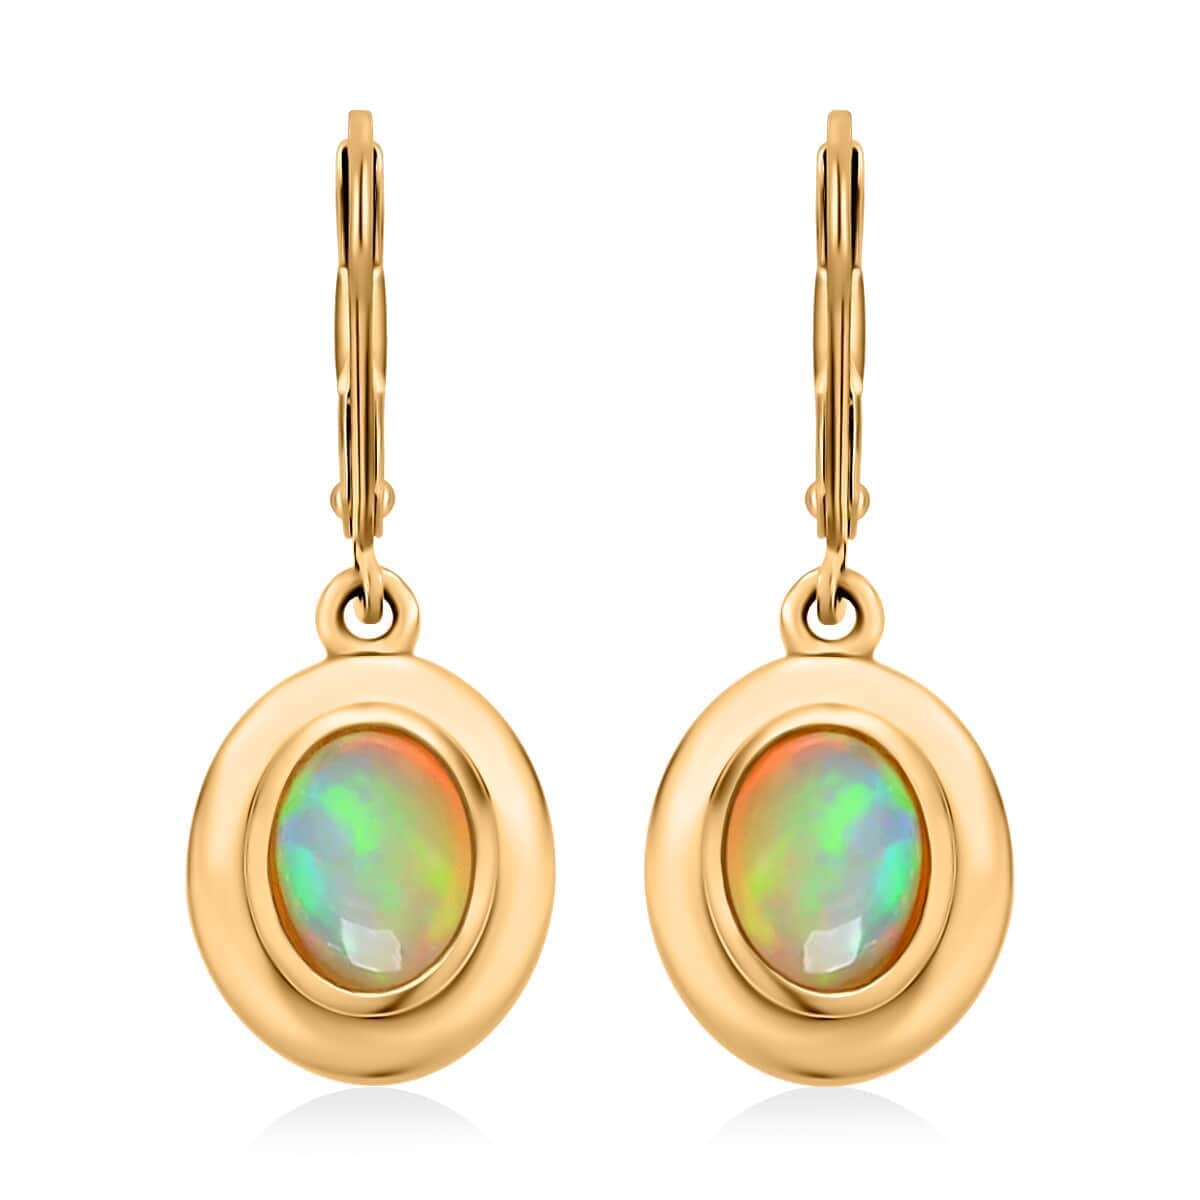 Luxoro Premium Ethiopian Welo Opal Earrings, 14K Yellow Gold Earrings, Opal Dangle Earrings, Gold Dangle Earrings, Gold Gifts For Her 4.25 Grams 1.75 ctw image number 0